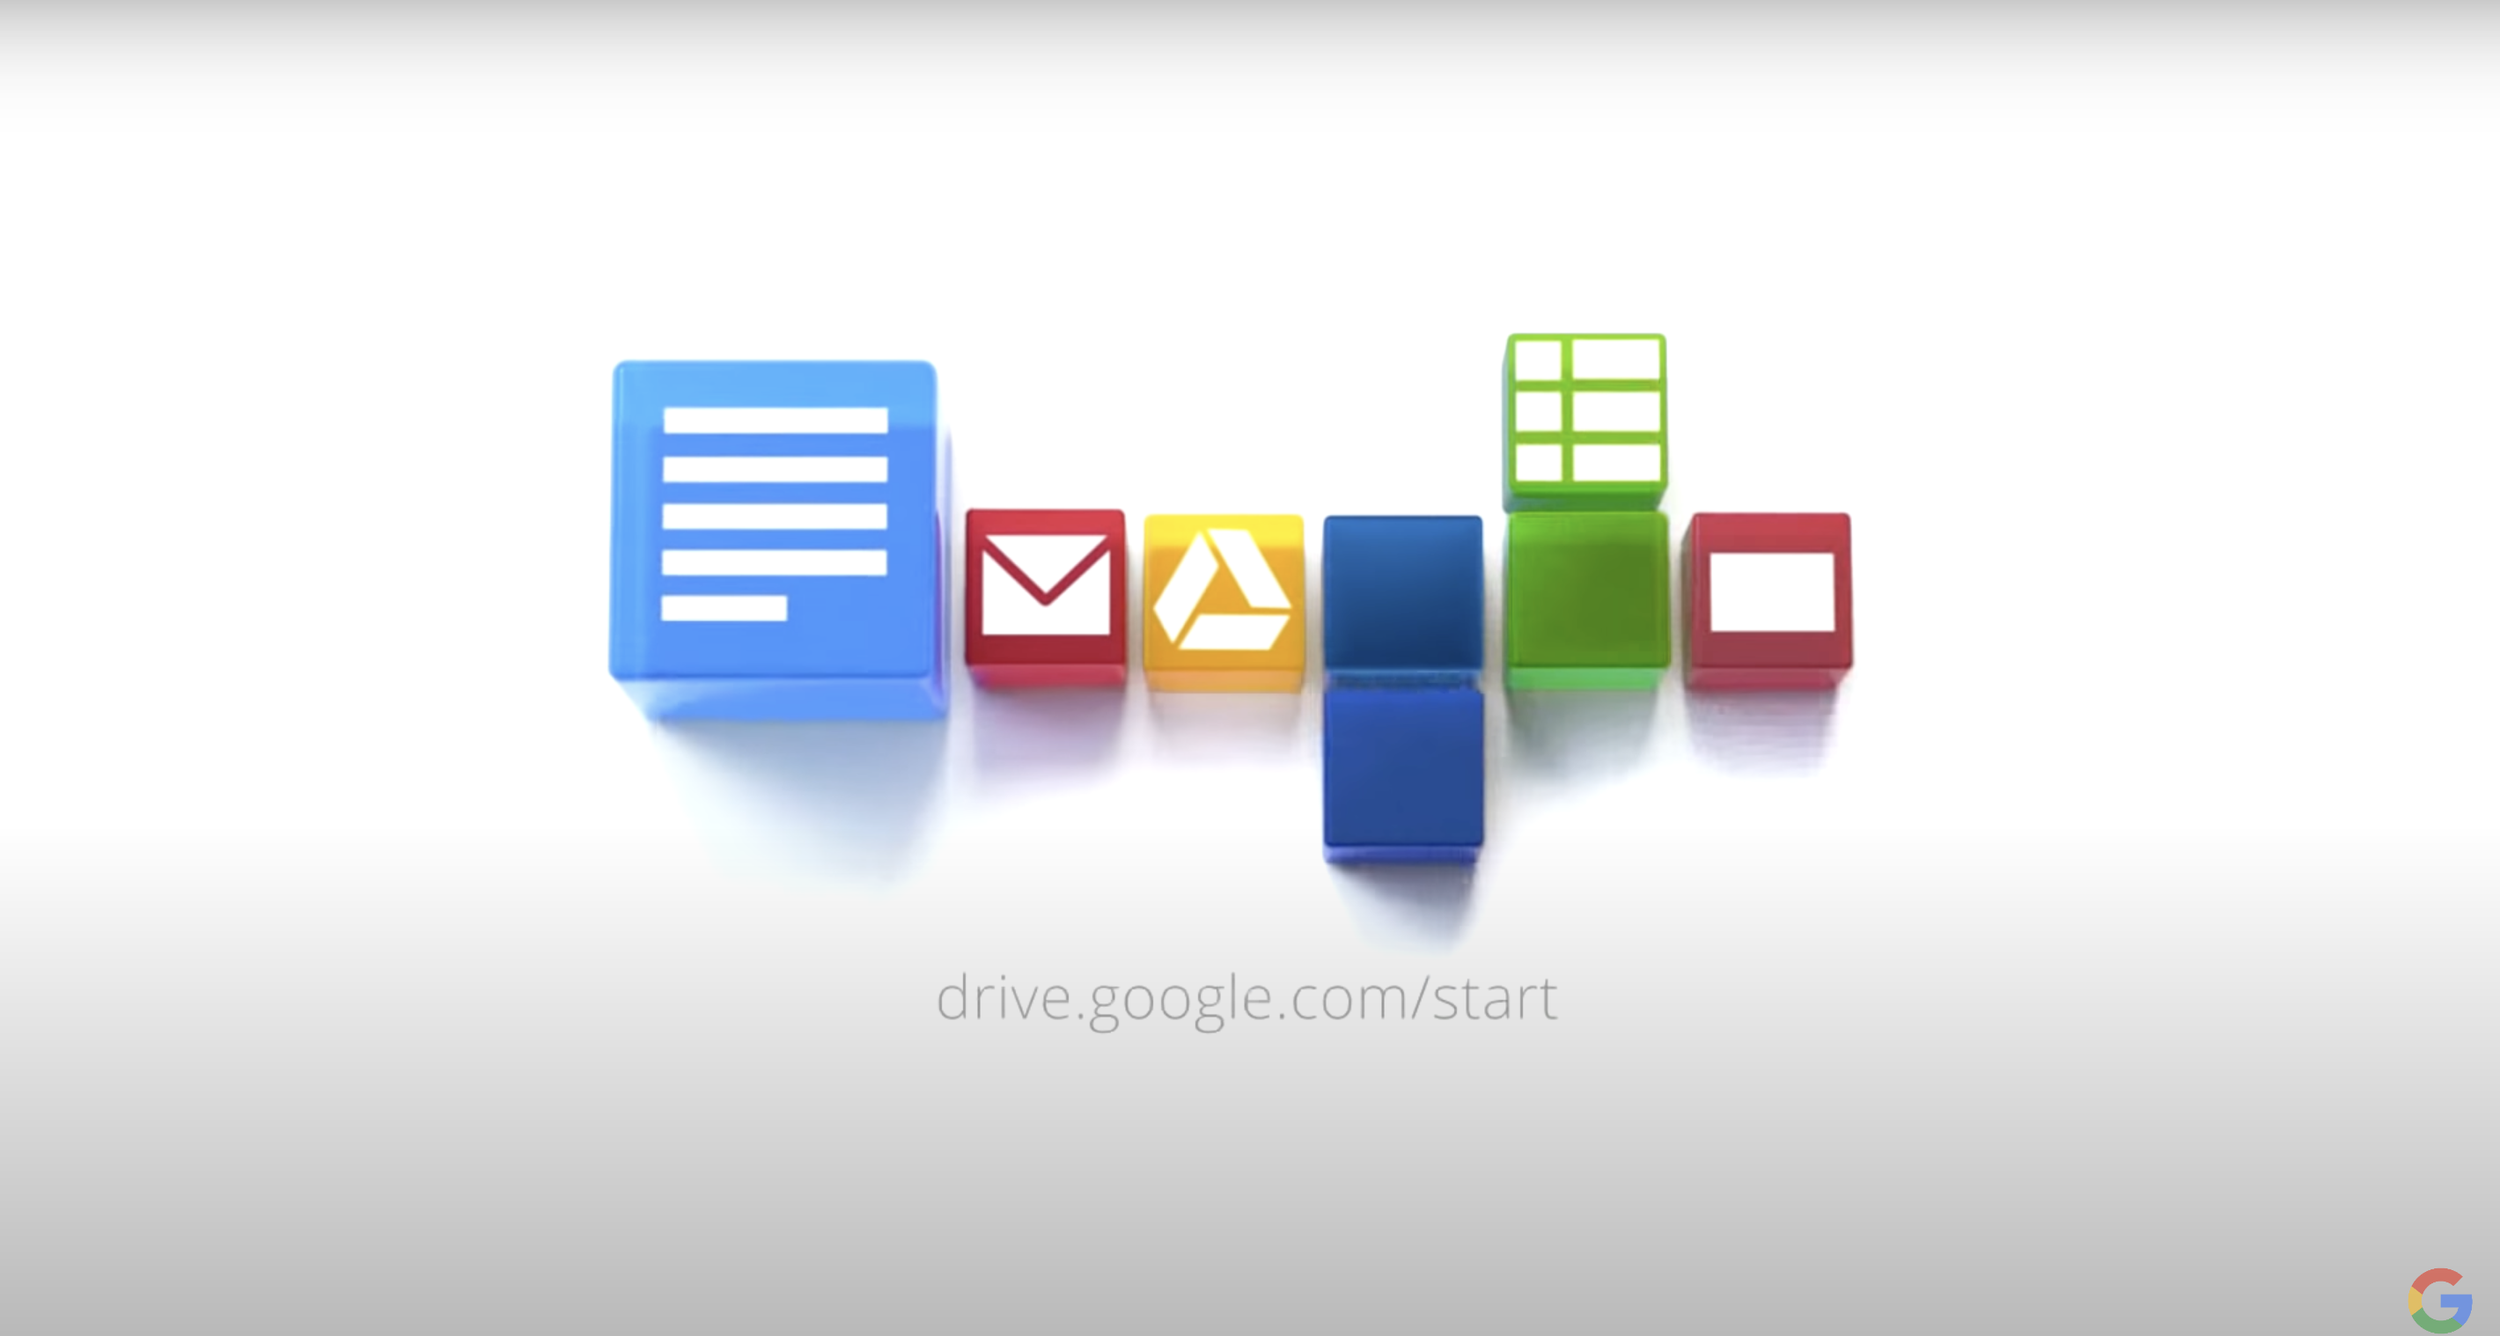 Launching Google Drive